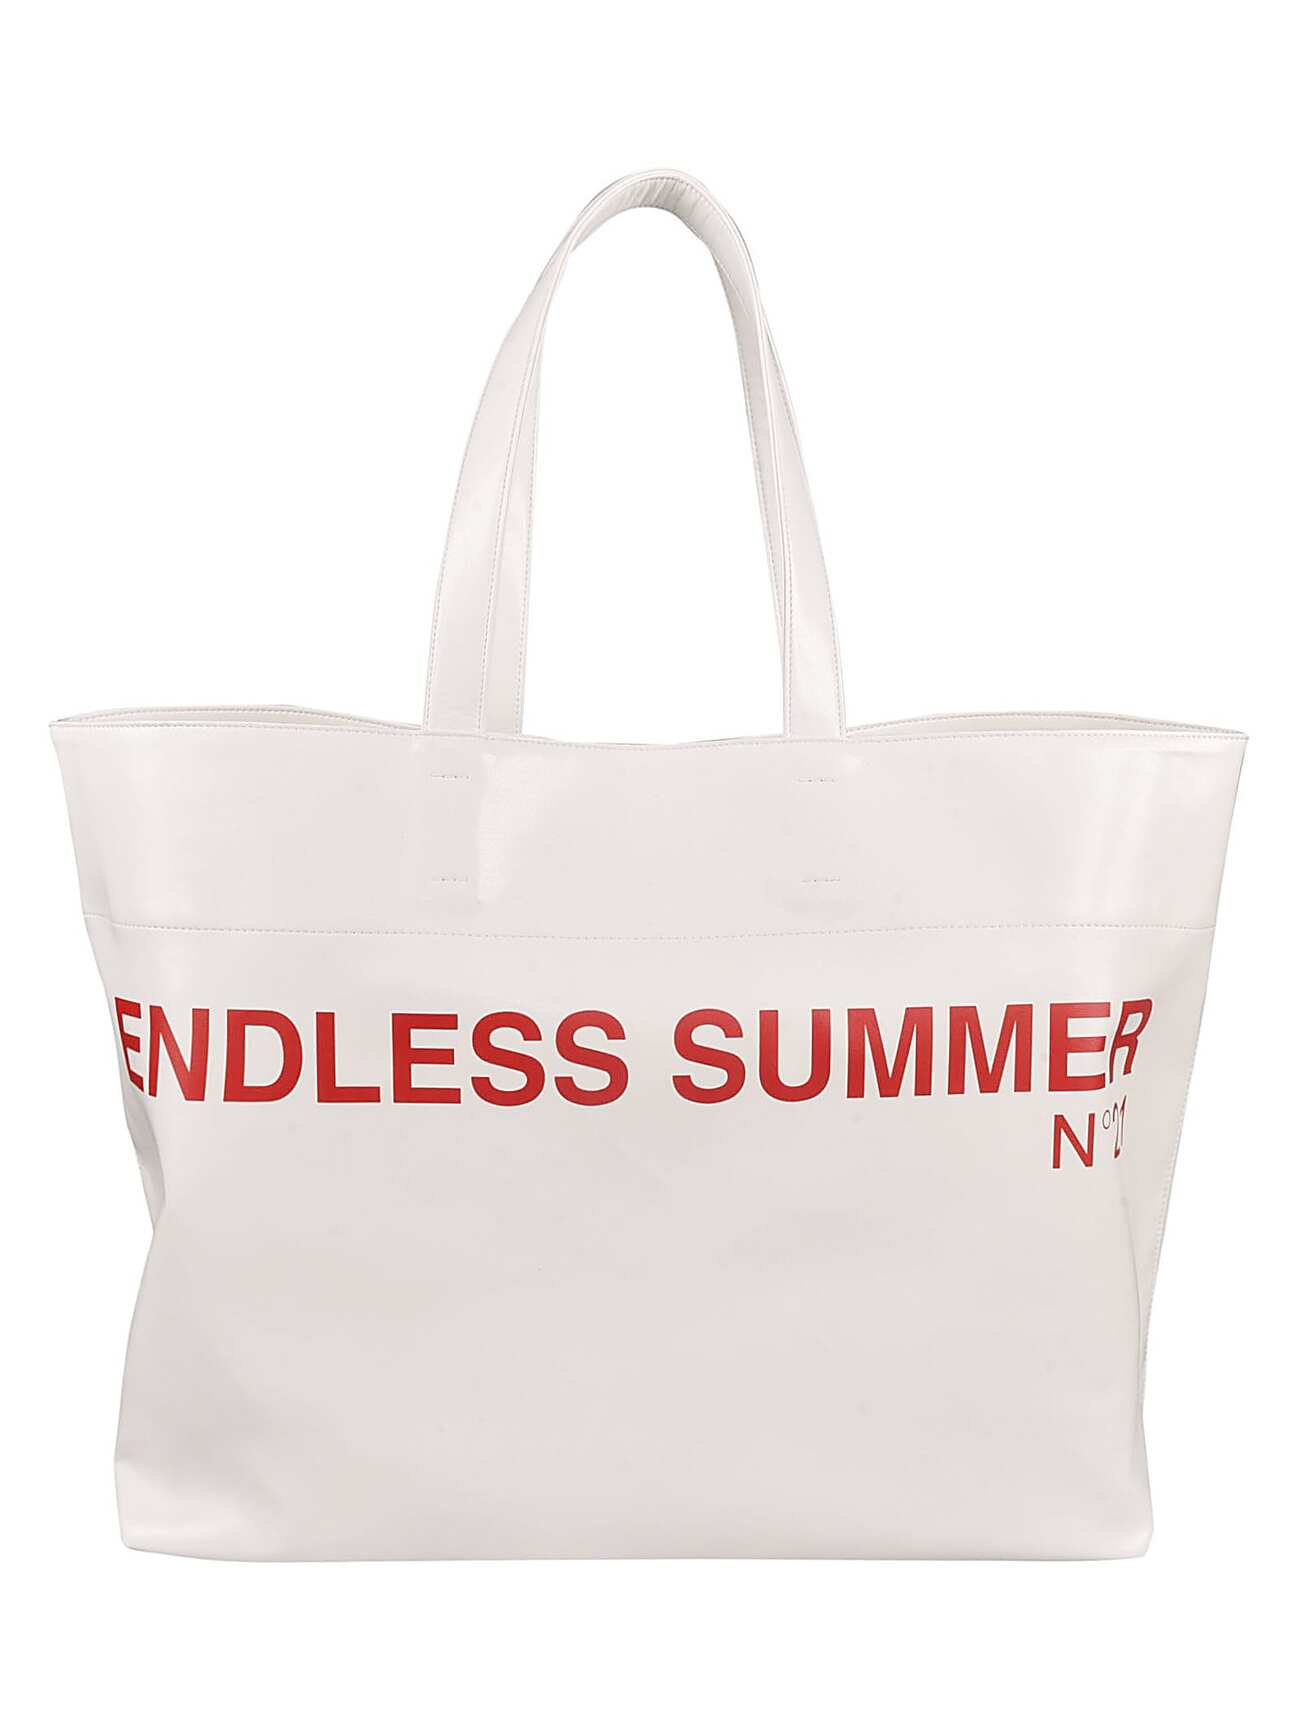 N.21 Endless Summer Shopper Bag in white / print